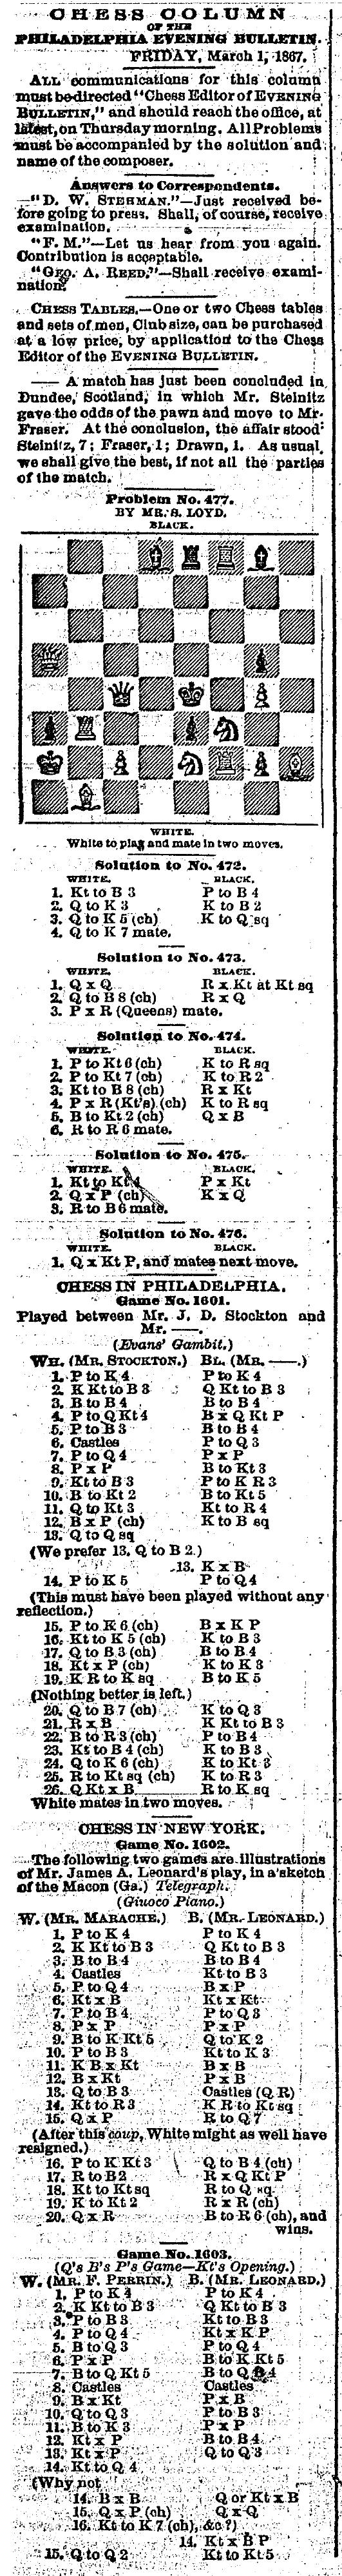 1867.03.01-01 Philadelphia Daily Evening Bulletin.jpg